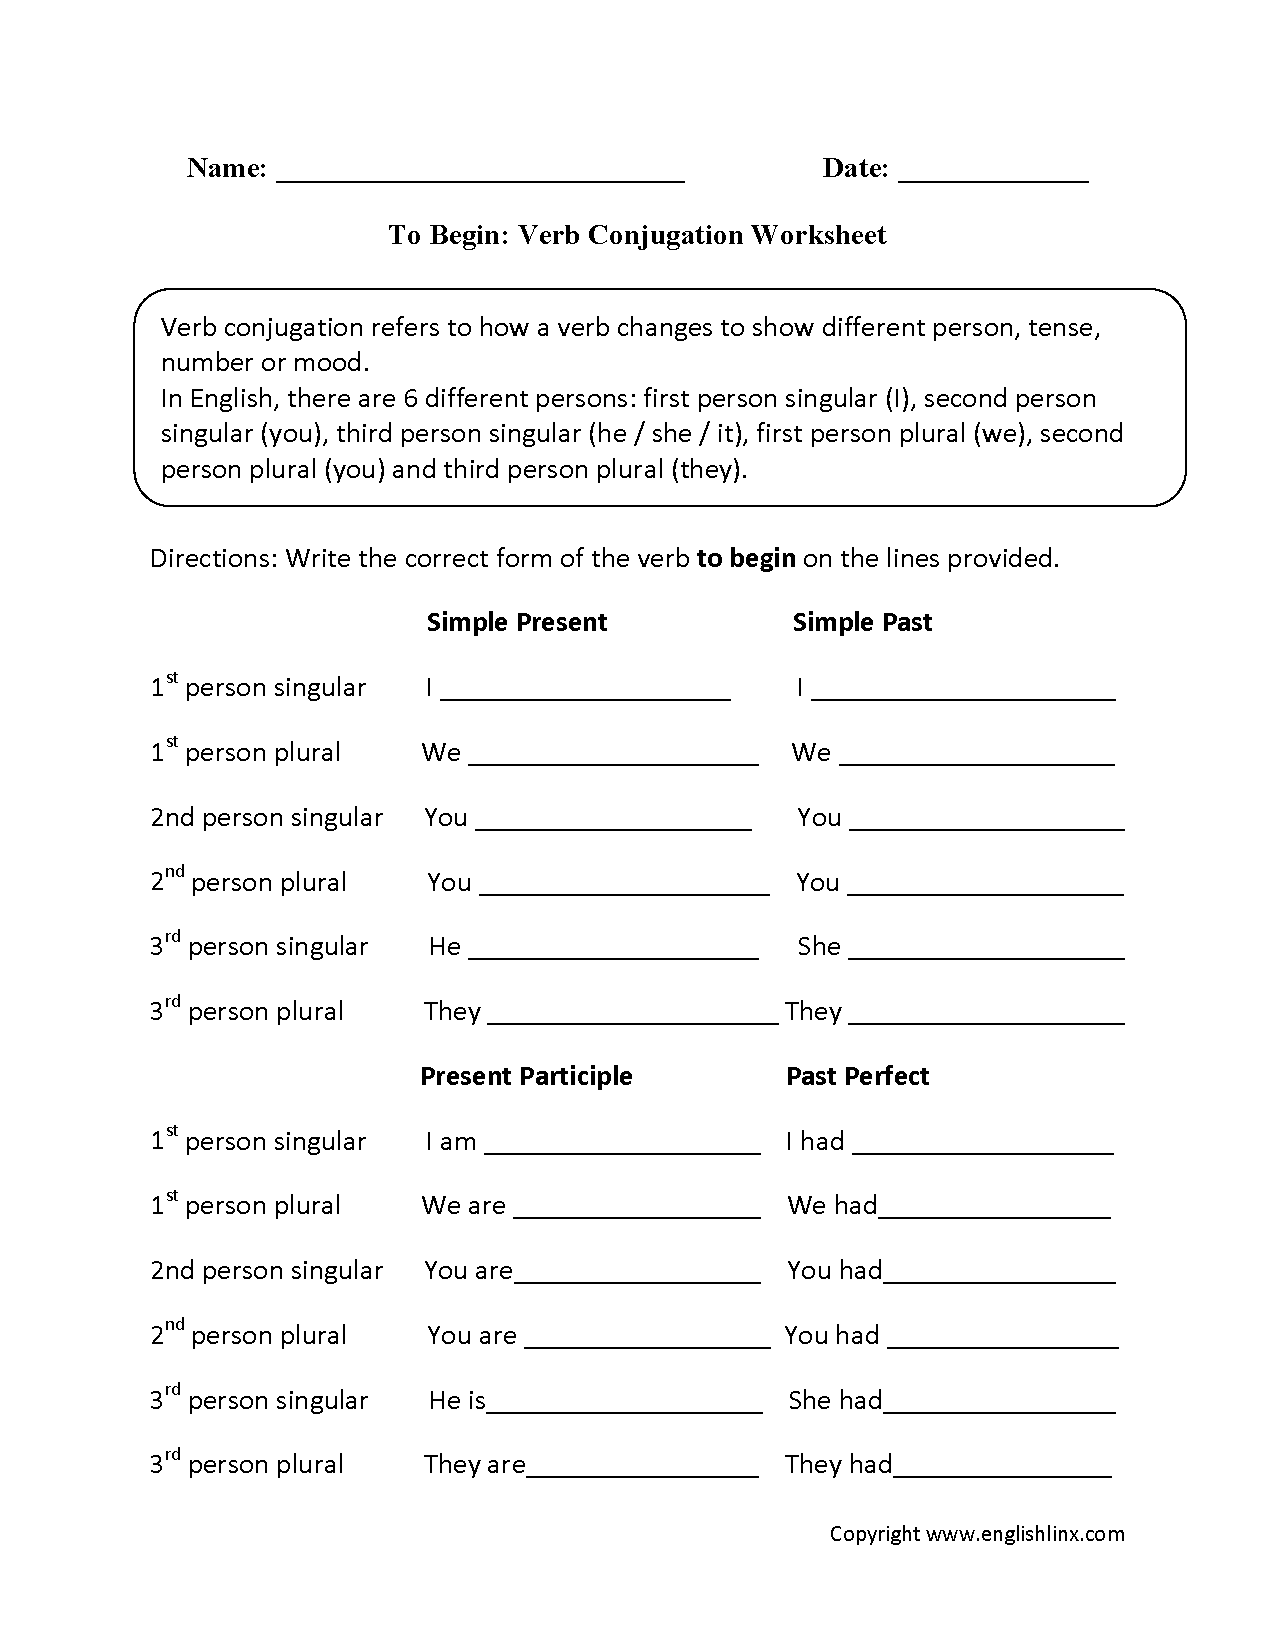 Verbs Worksheets | Verb Conjugation Worksheets